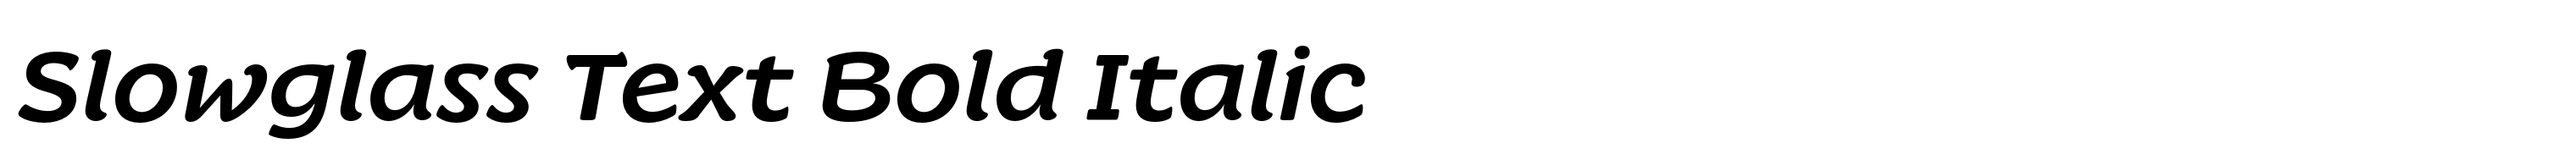 Slowglass Text Bold Italic